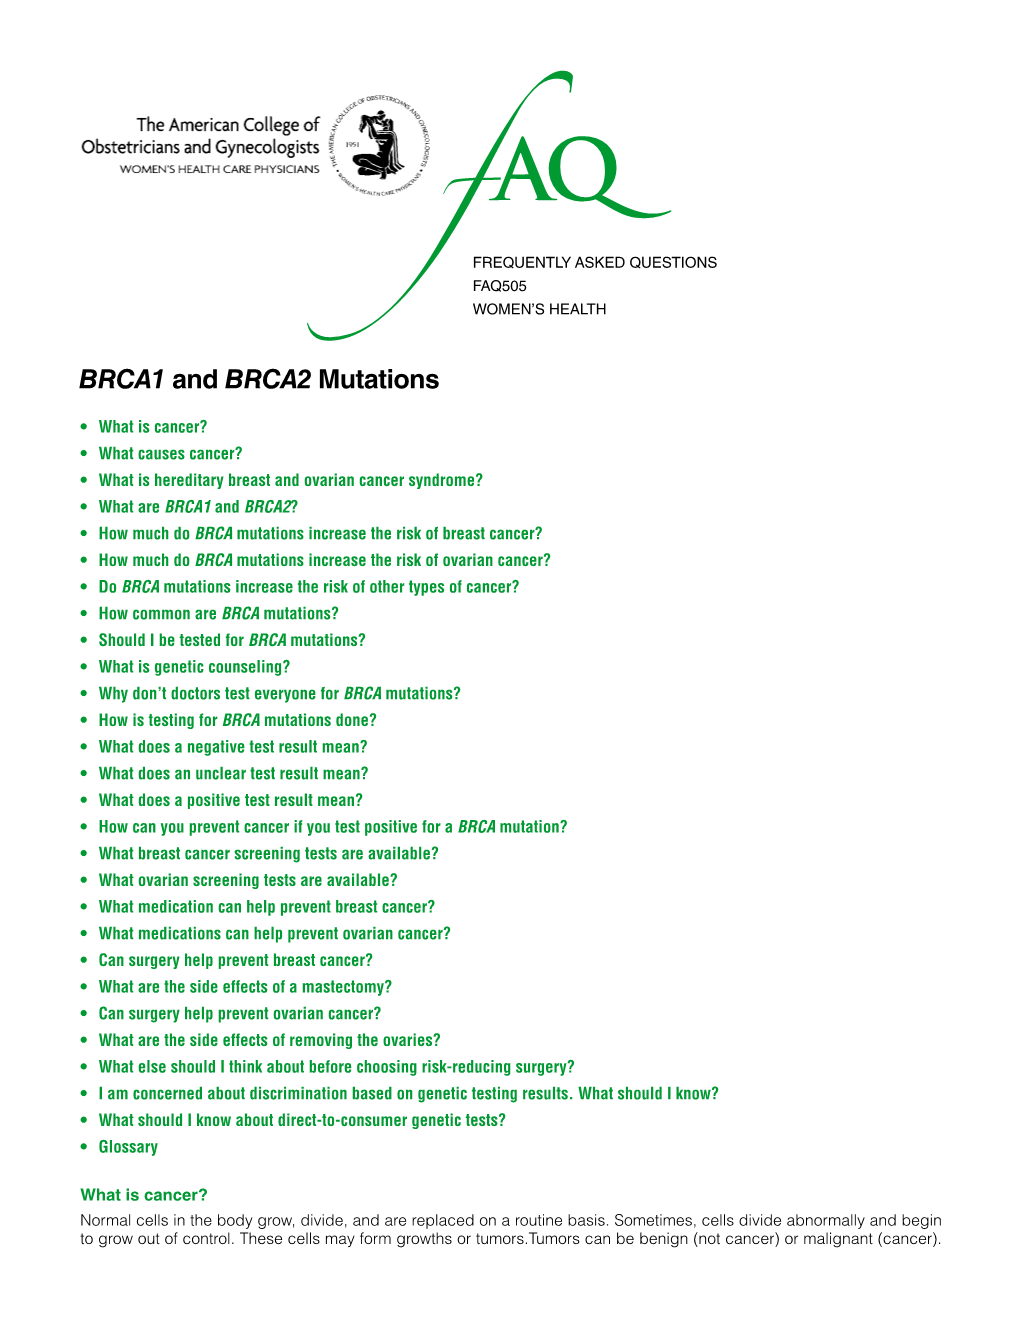 FAQ505 -- BRCA1 and BRCA2 Mutations